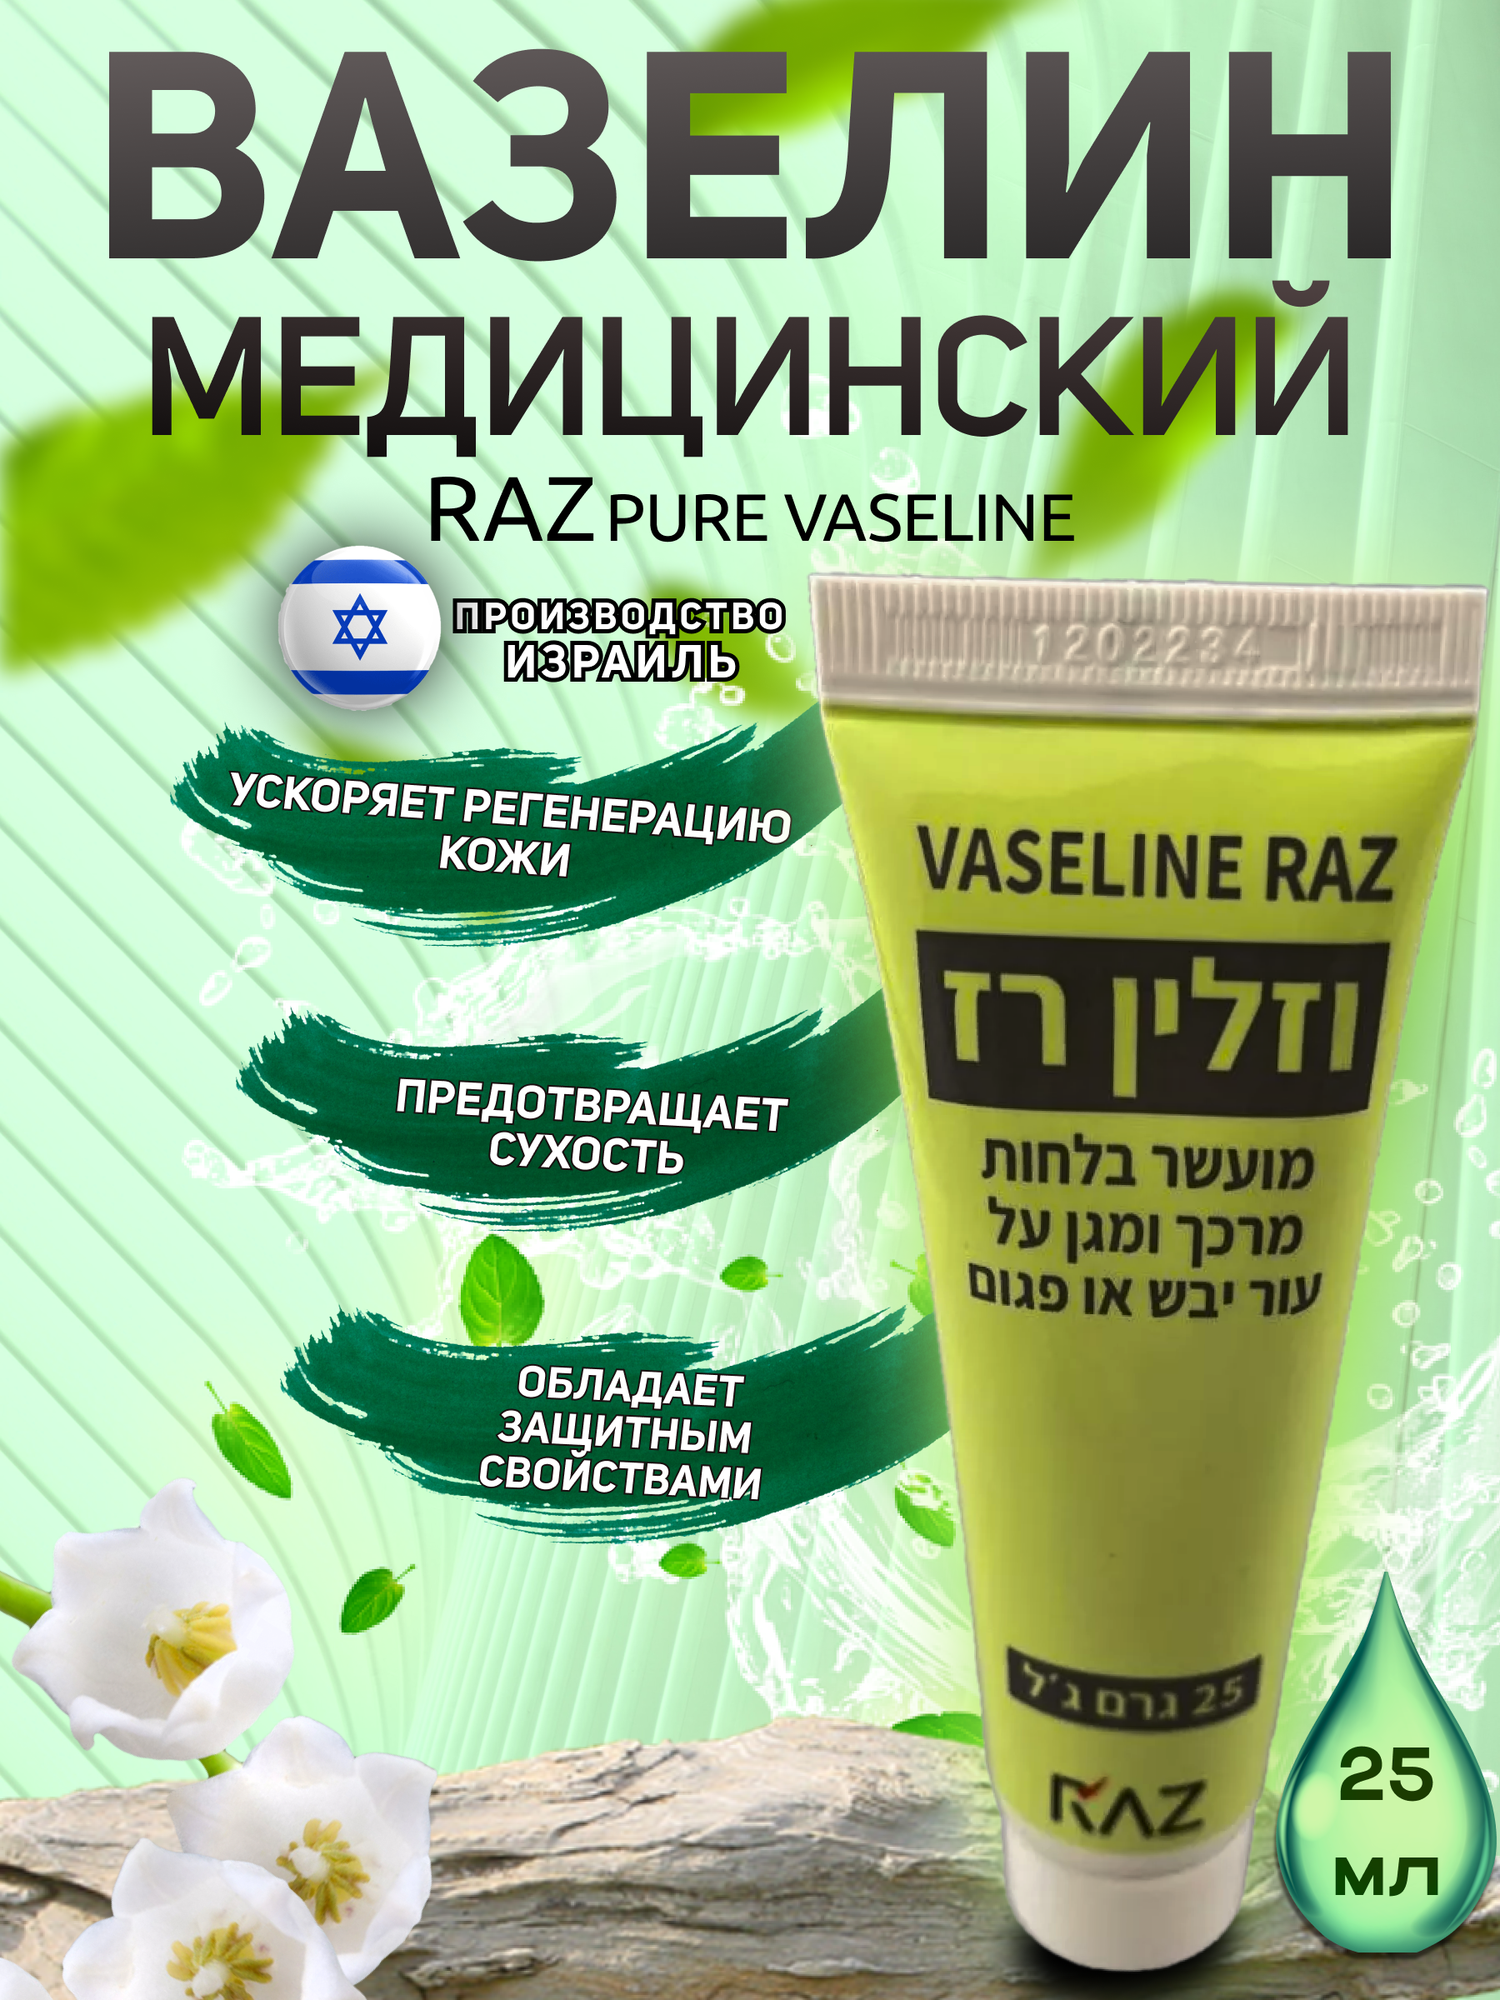 Медицинский косметический вазелин израильский Pure Vaseline Extra Small от сухости и шелушений